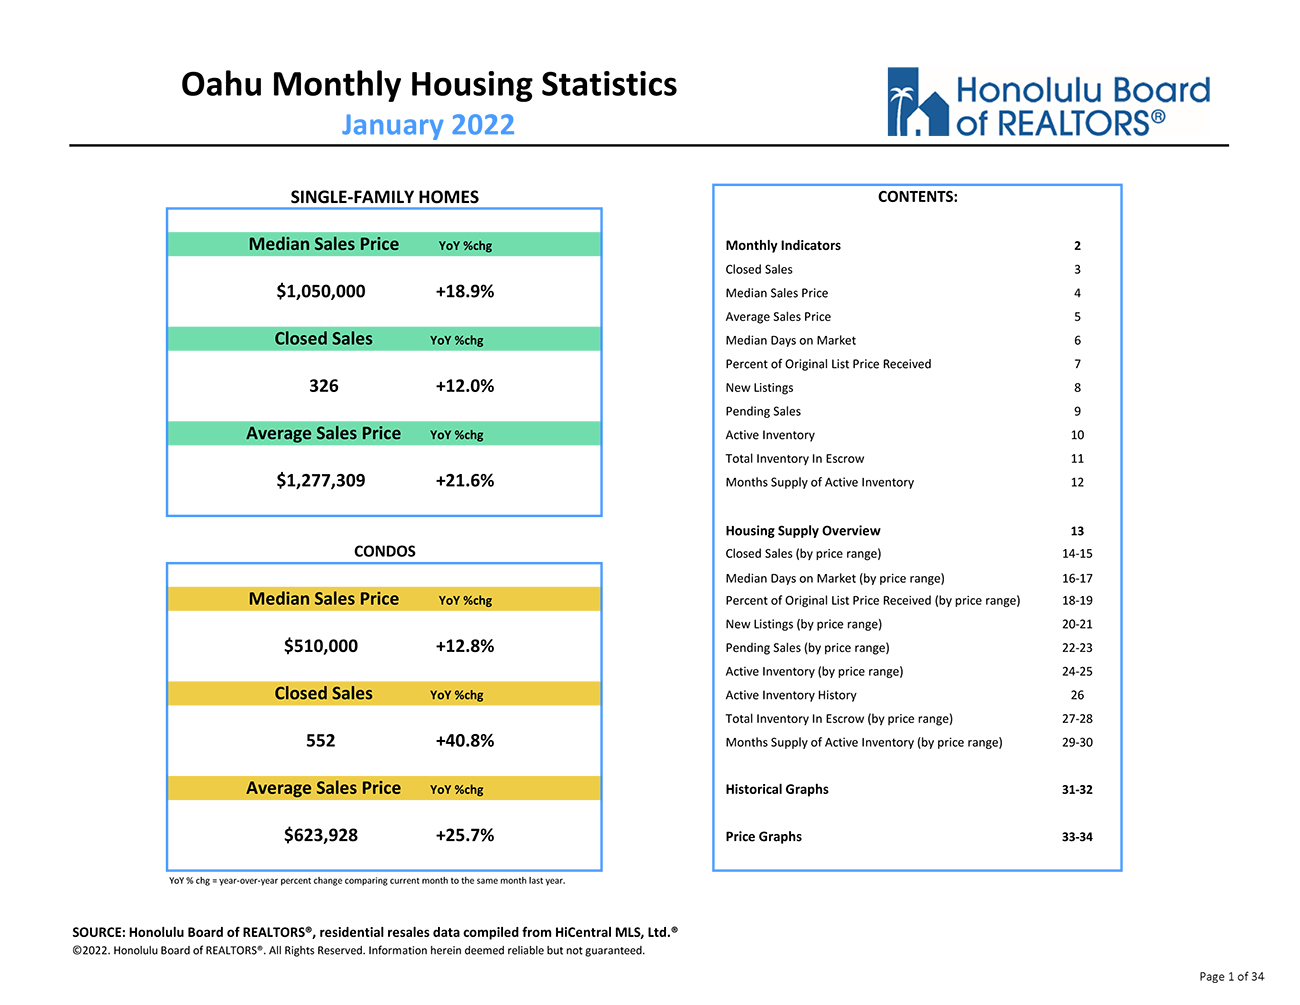 Oahu market report January 2022